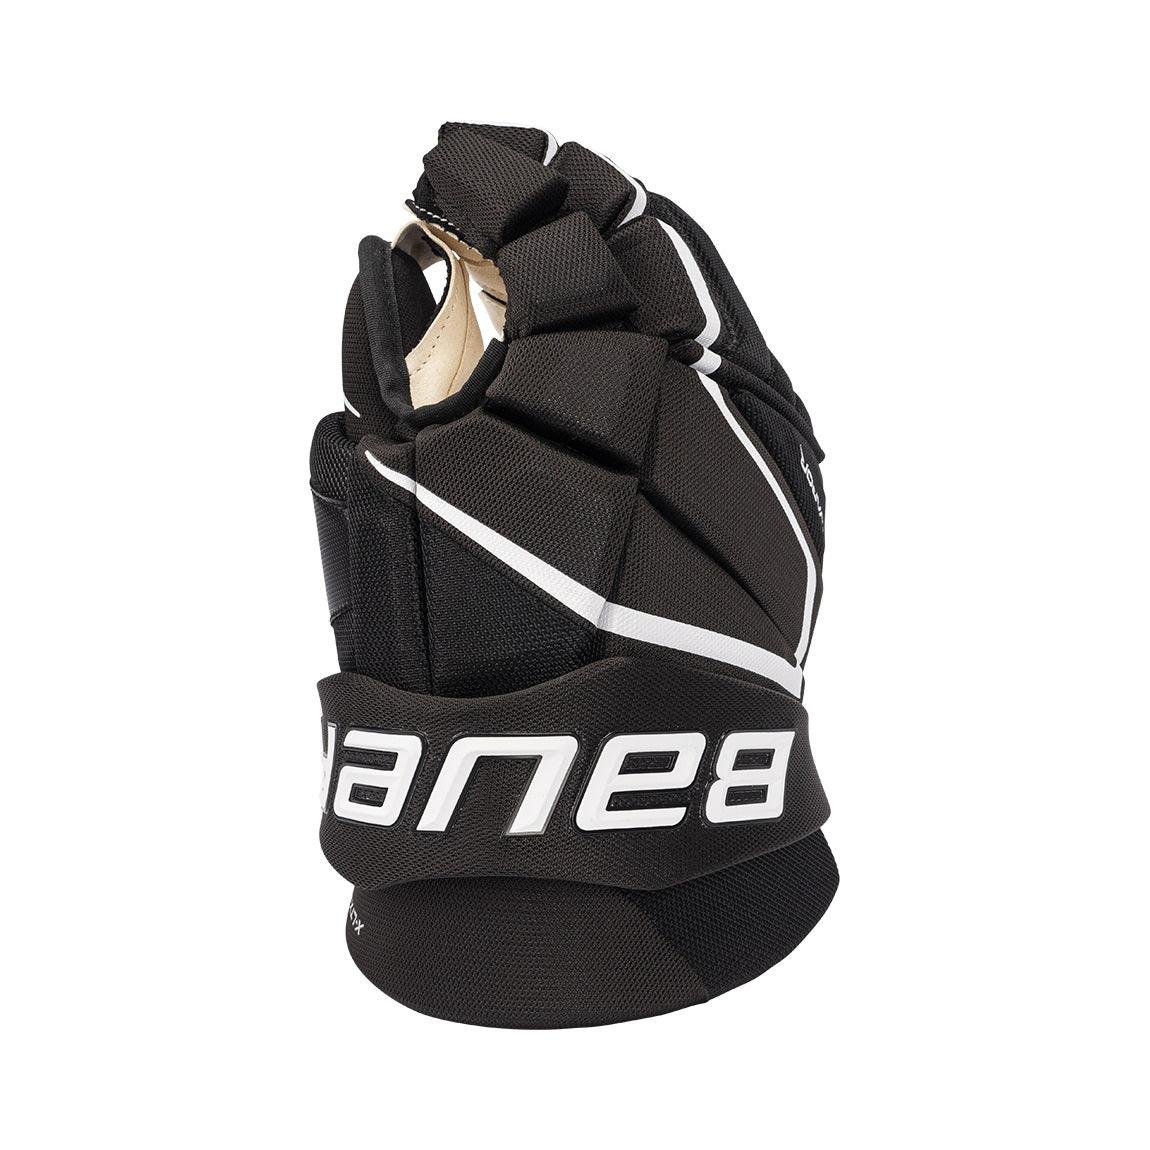 Vapor XLTX Pro+ Hockey Gloves - Senior - Sports Excellence